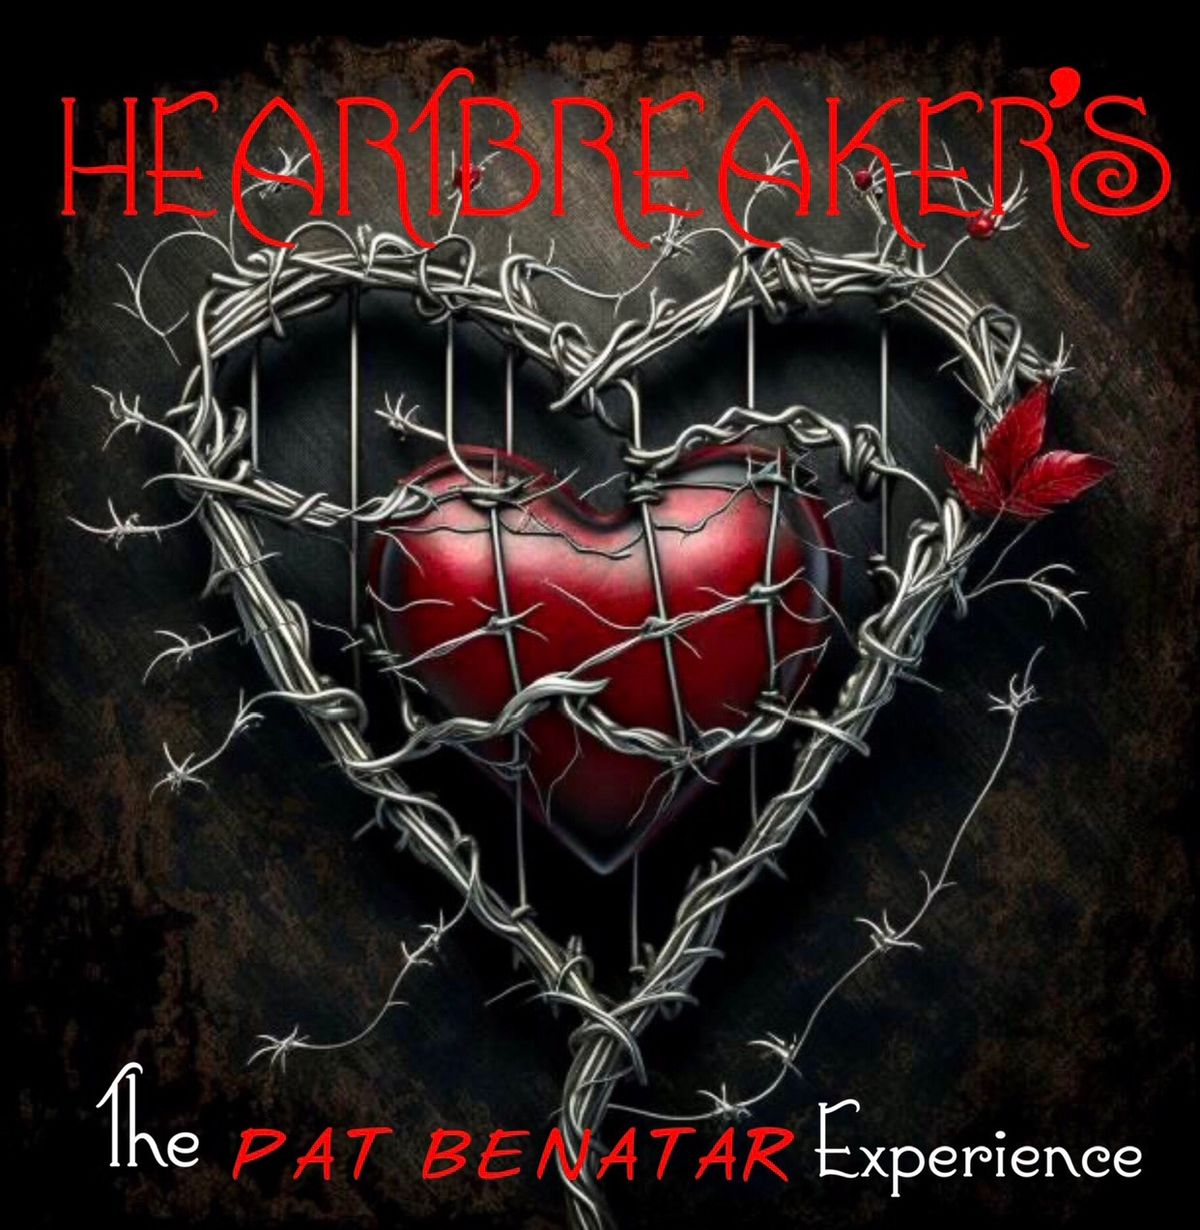 HEARTBREAKER\u2019S the Pat Benatar Experience WSG\/VELVET STEEL ROCK LK ST CLAIR METRO PARK . 